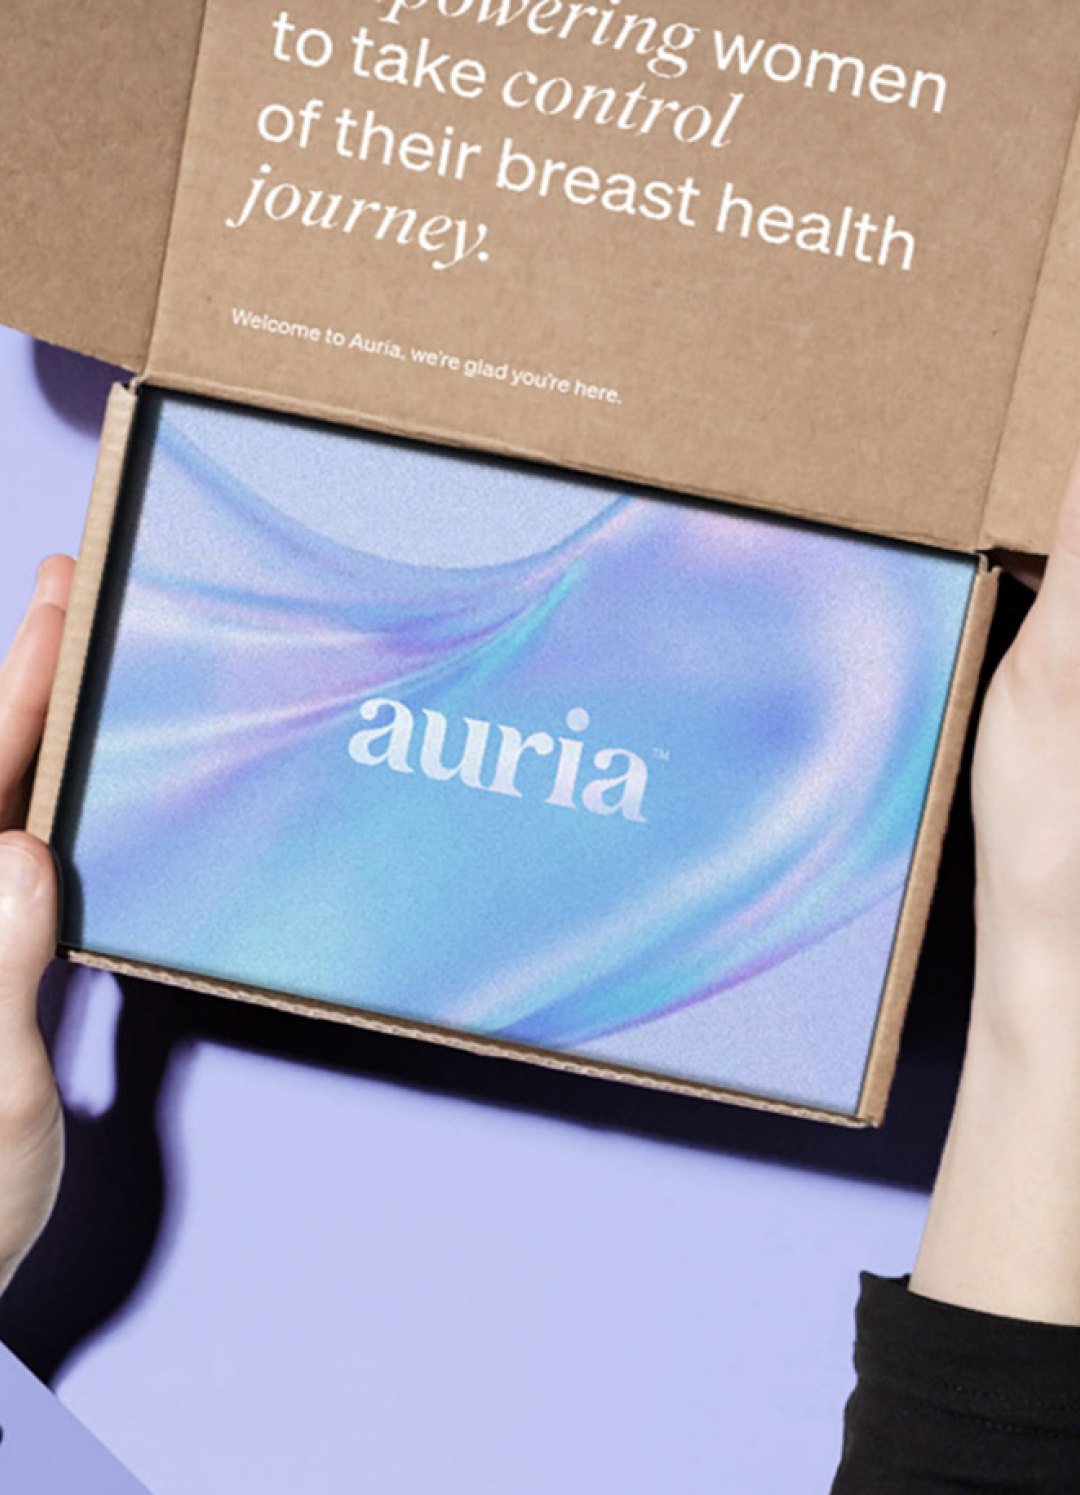 auria product top box